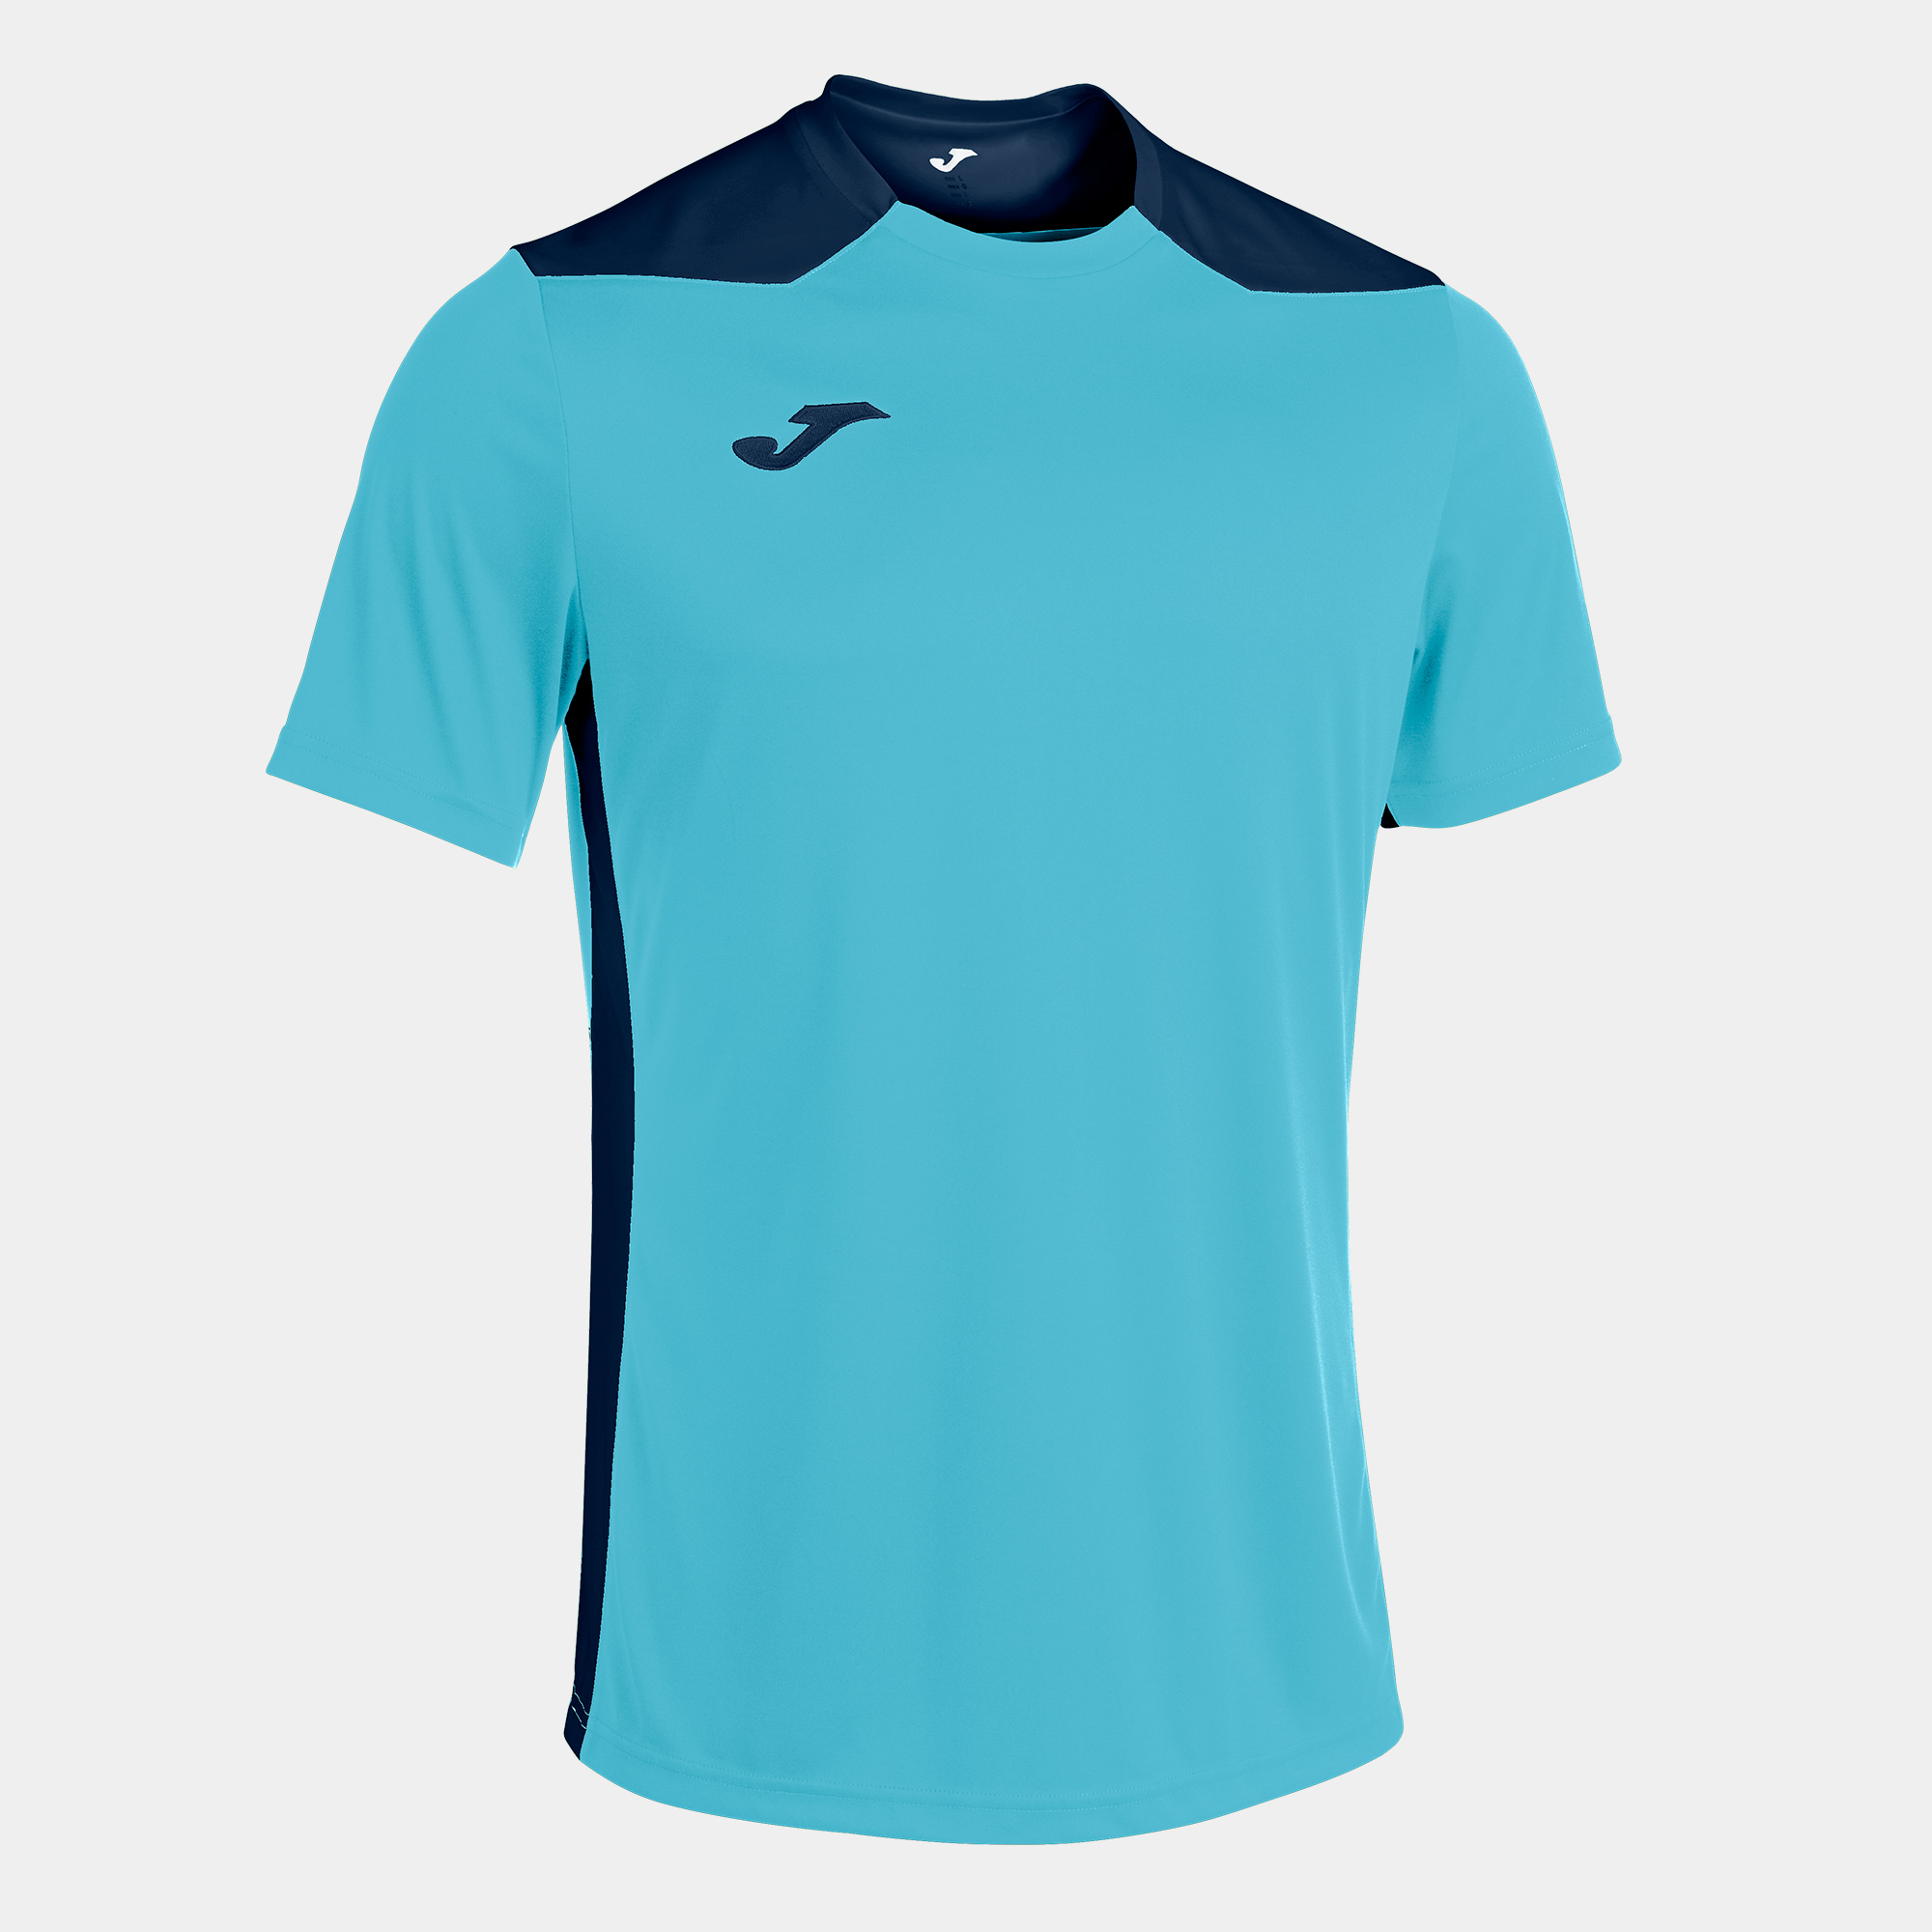 Rugby Hockey or any Team Sport JOMA SPORT Unisex Short Sleeve Top CHAMPION VI Suitable for Football Futsal